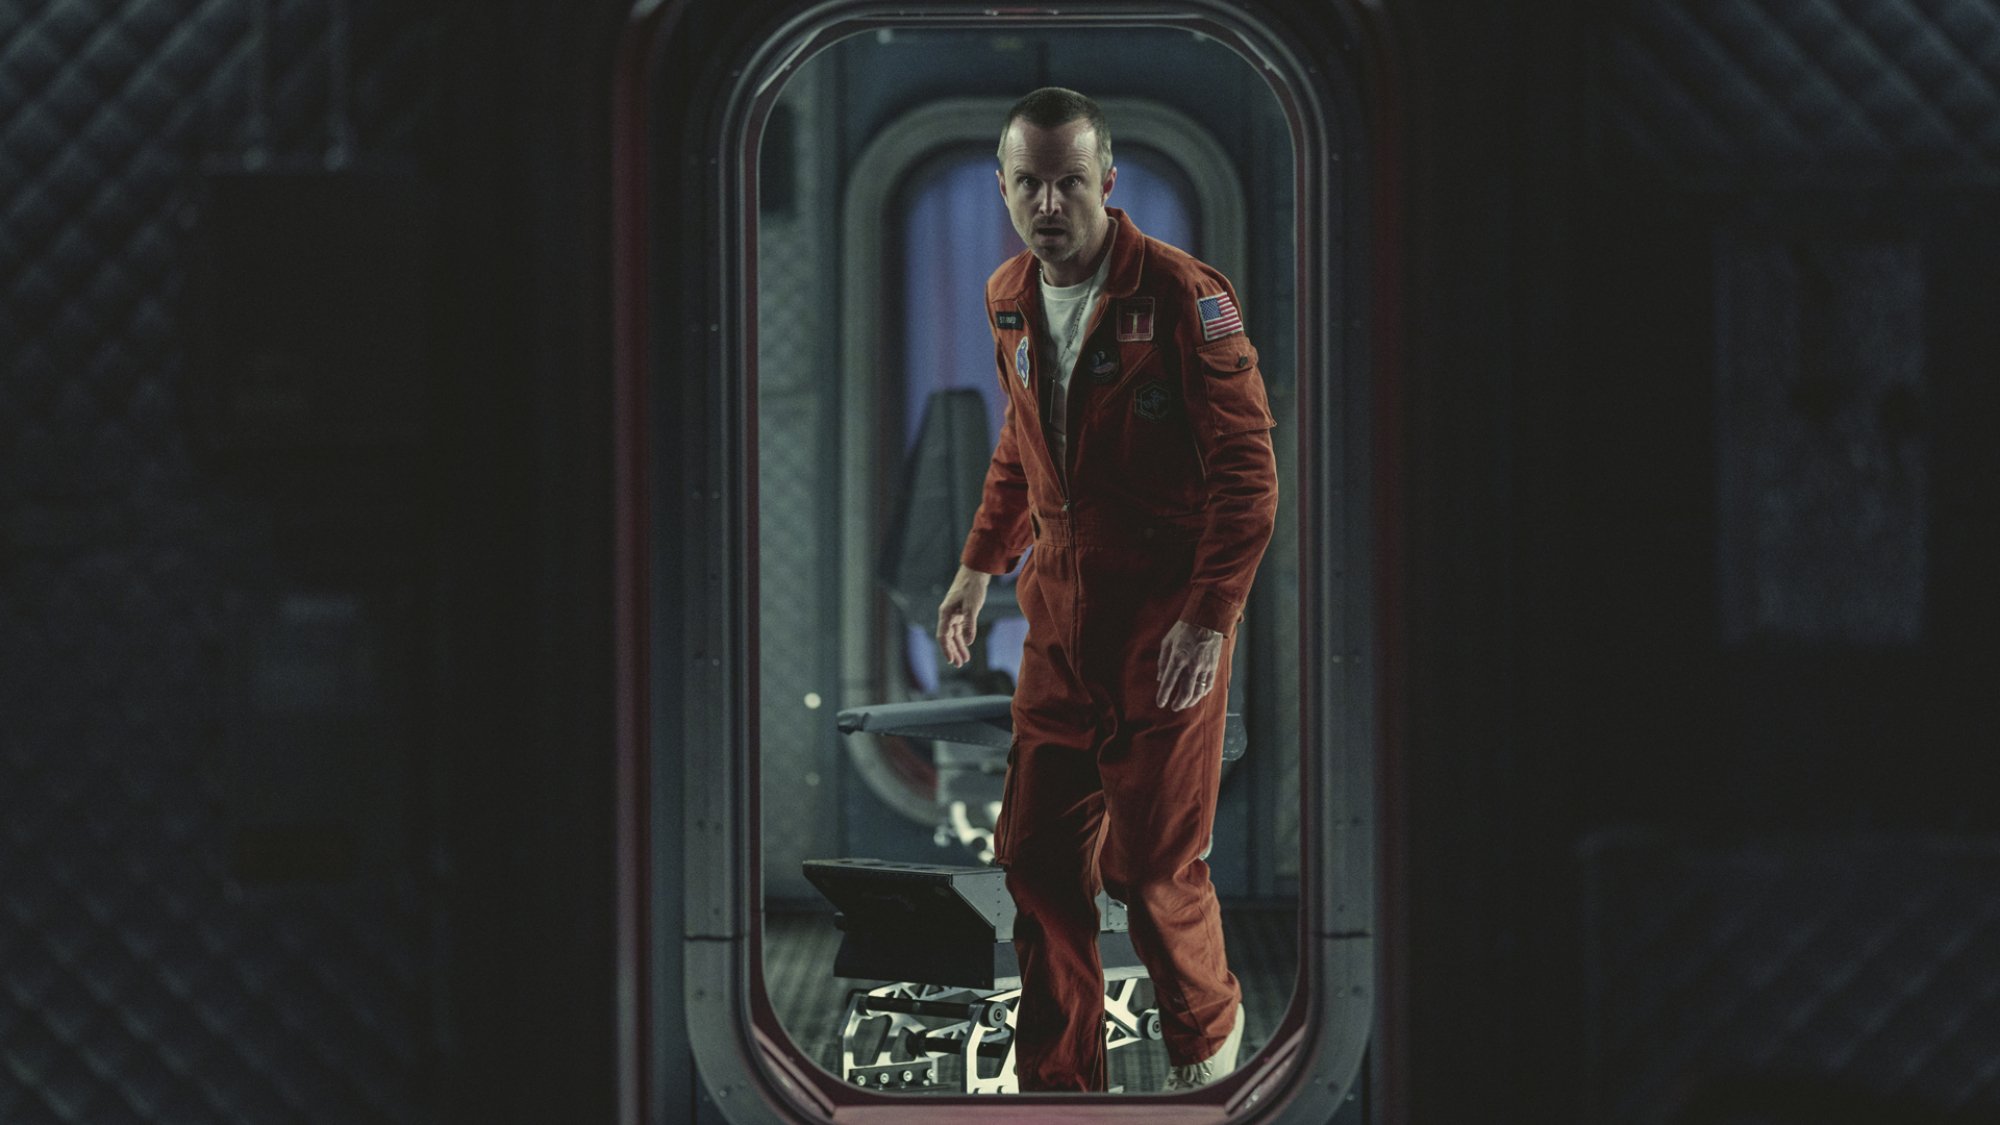 In the TV show "Black Mirror" Aaron Paul is an astronaut standing in a curved doorway.